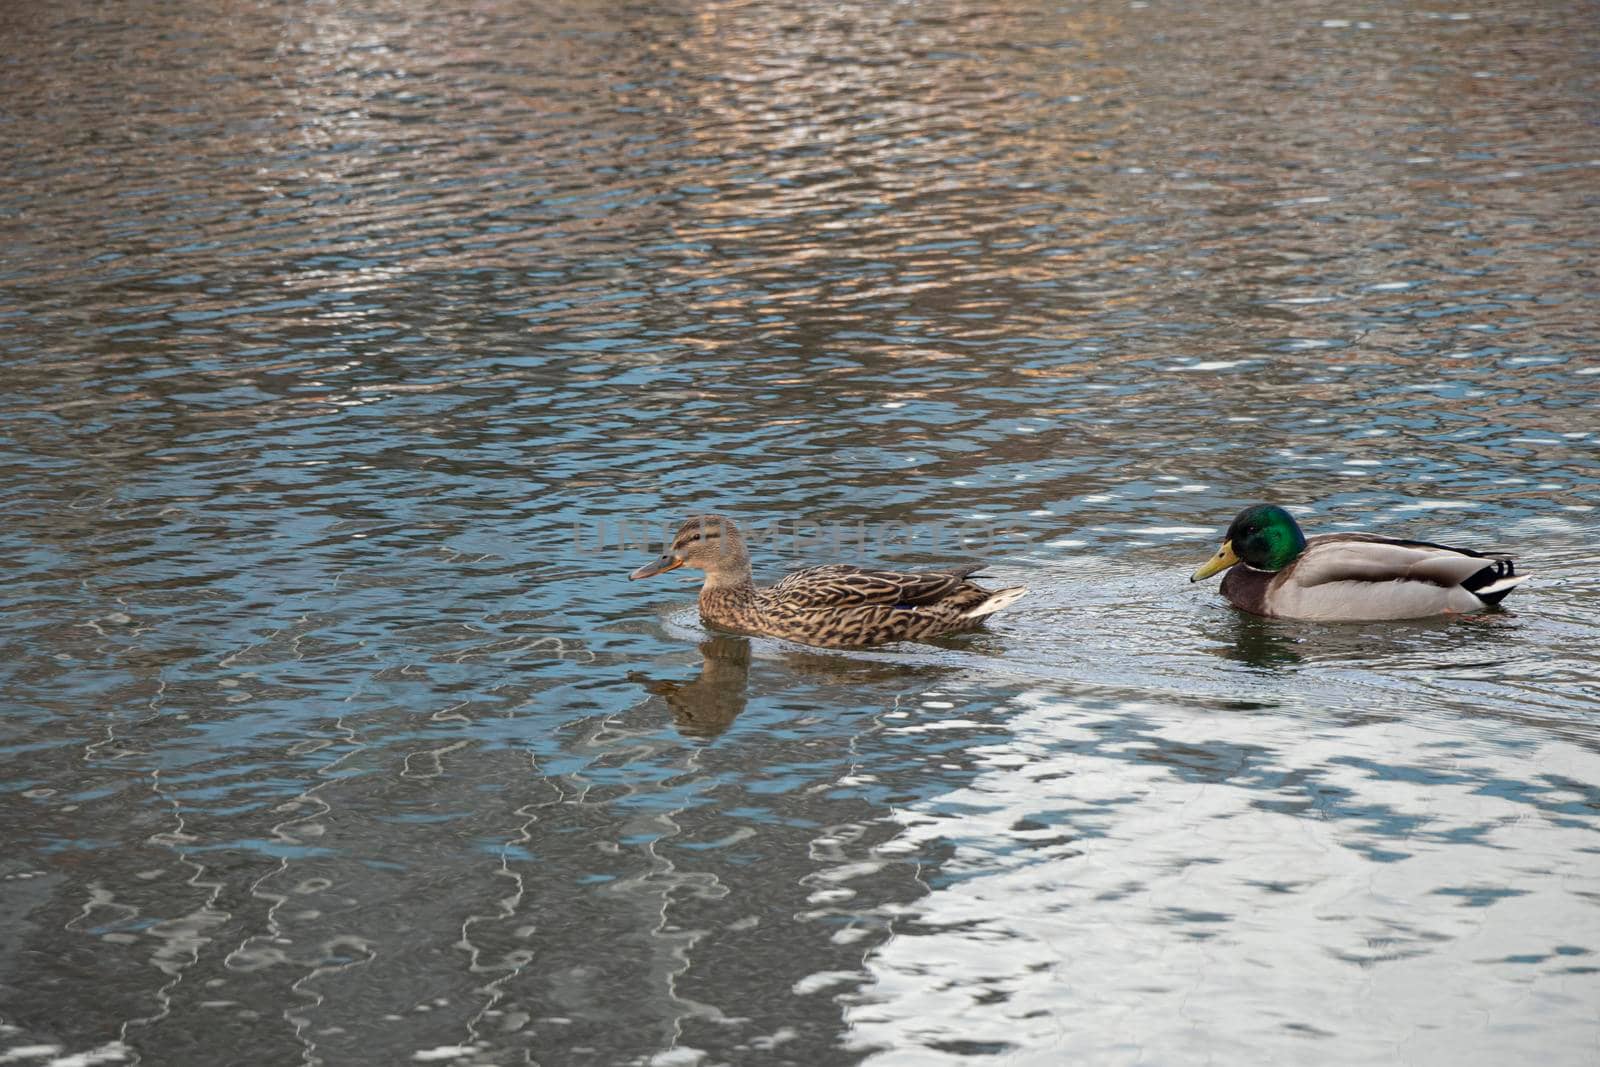 Mallard duck , Anas platyrhynchos, floating on water in sunny day. by Suietska